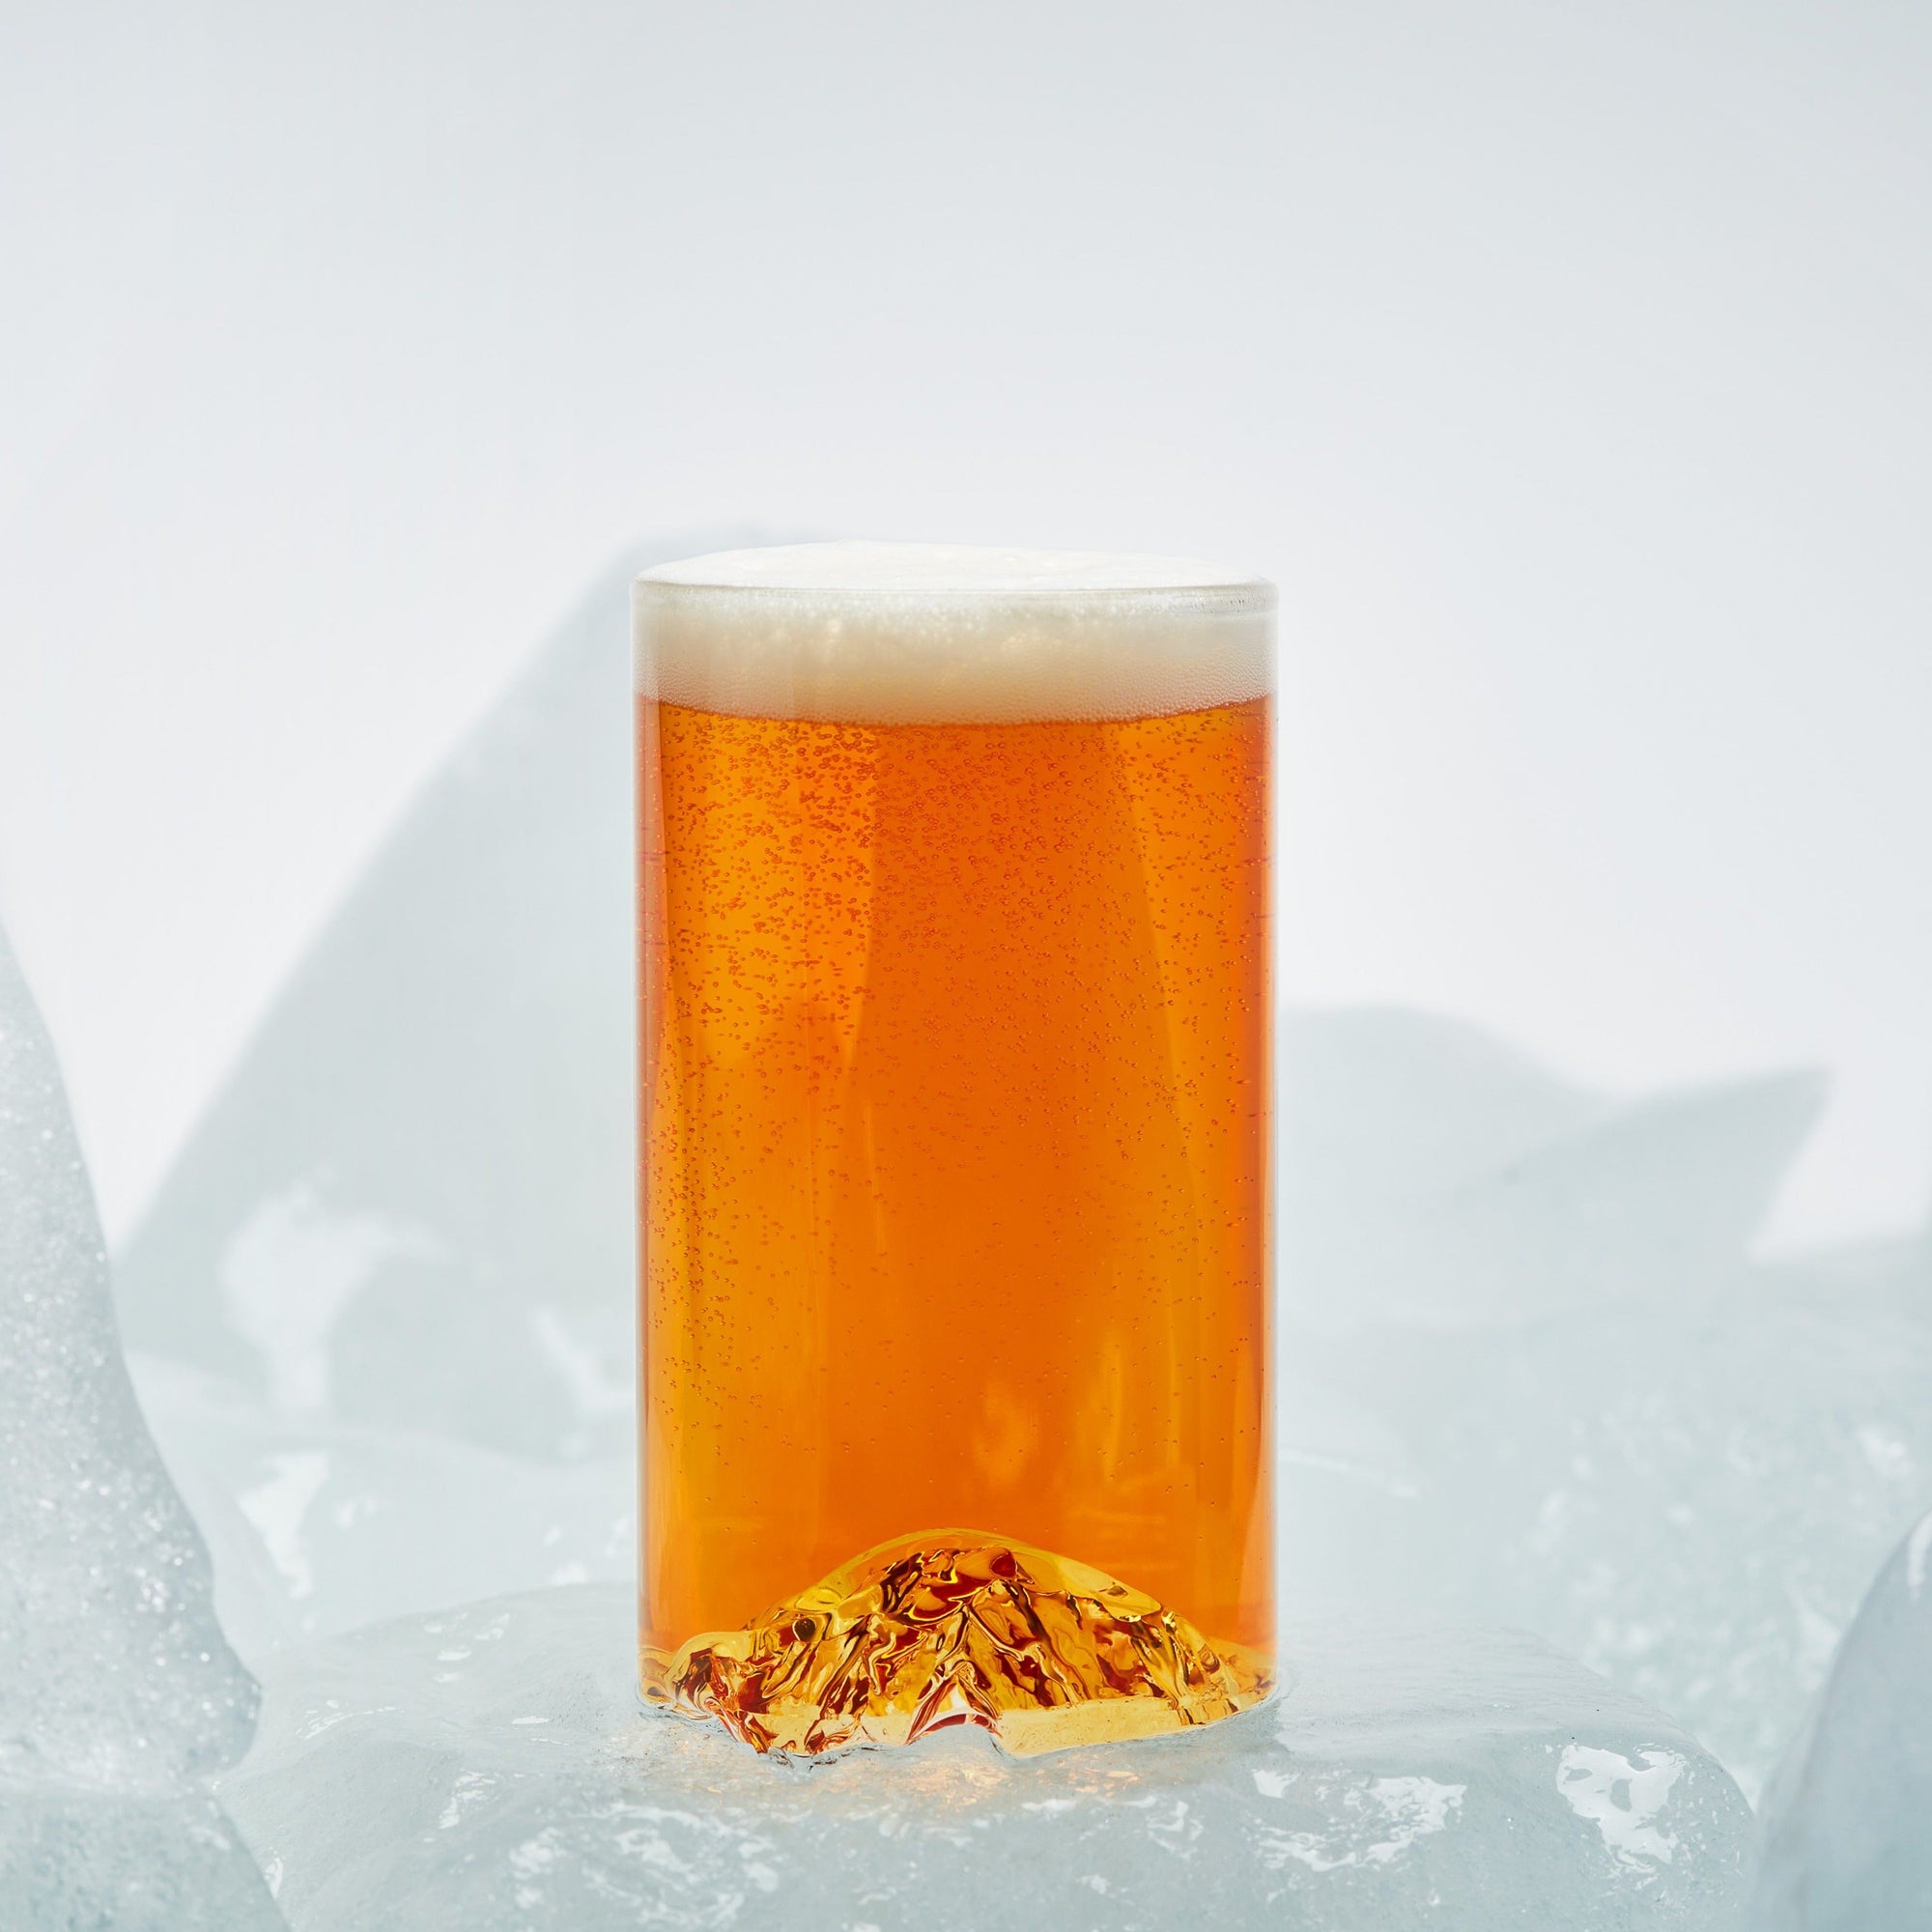 Mountain Pint Beer Glasses - Denali Mountain Base - 16 oz - Set of 6